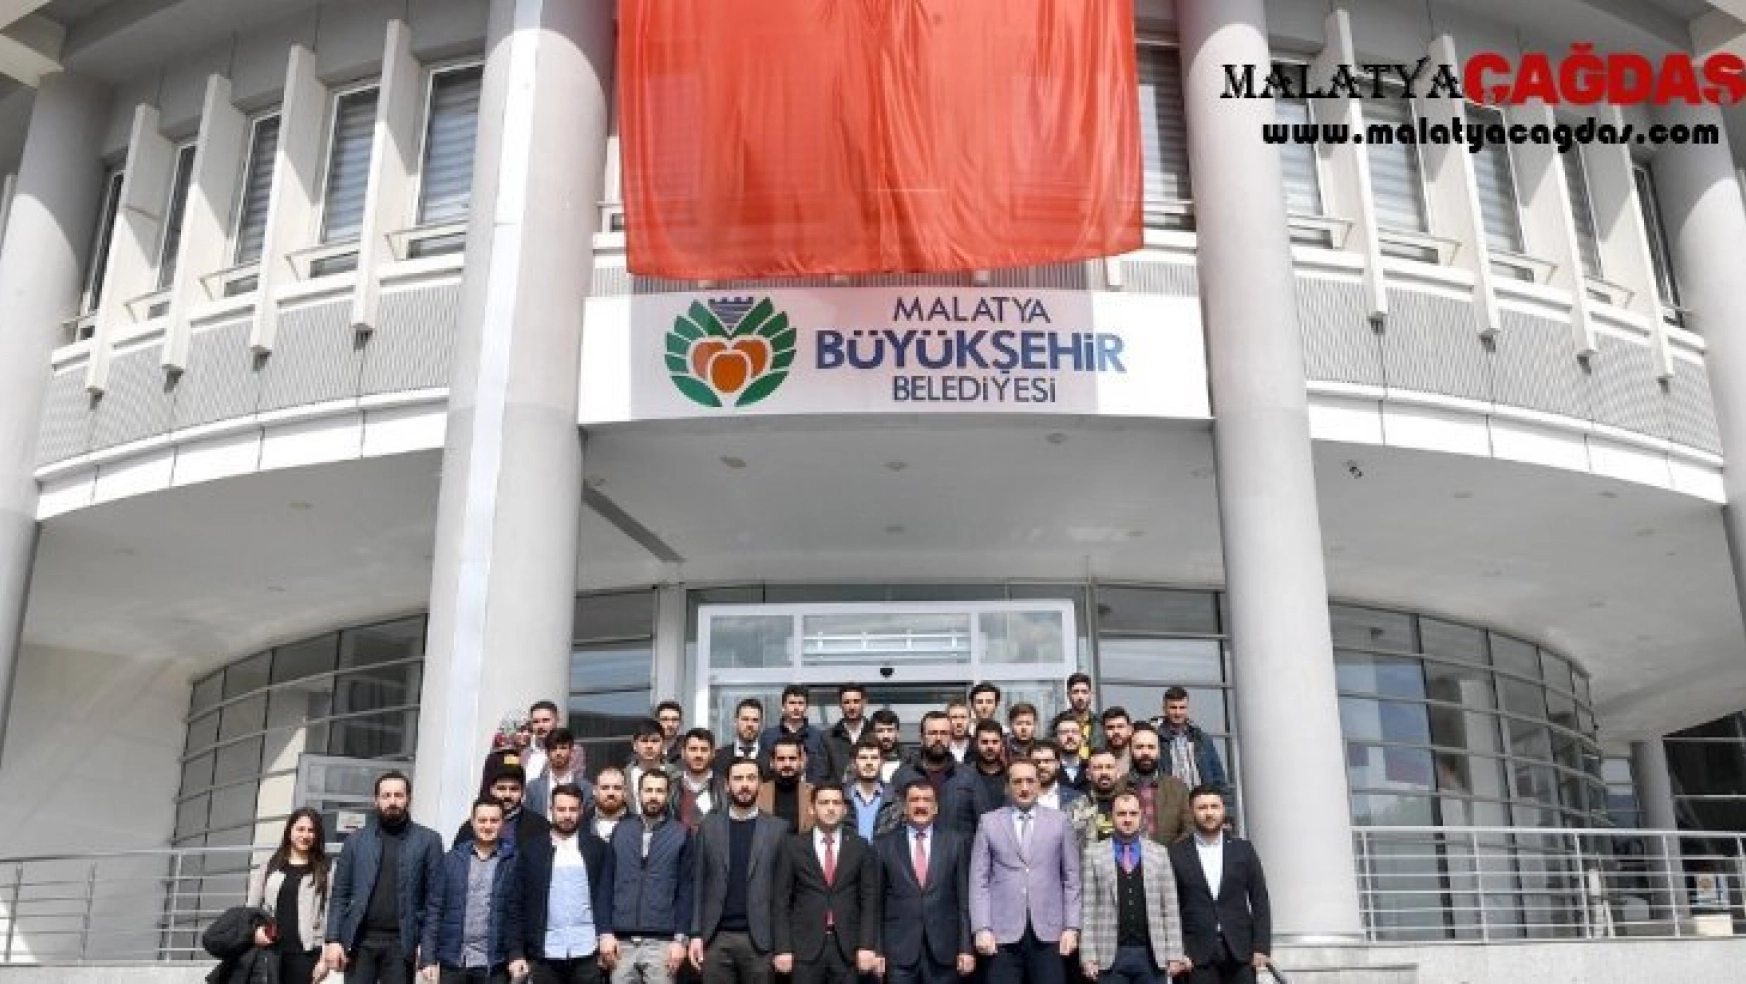 Malatya'a maça gelen taraftarlara Türk Bayrağı dağıtılacak